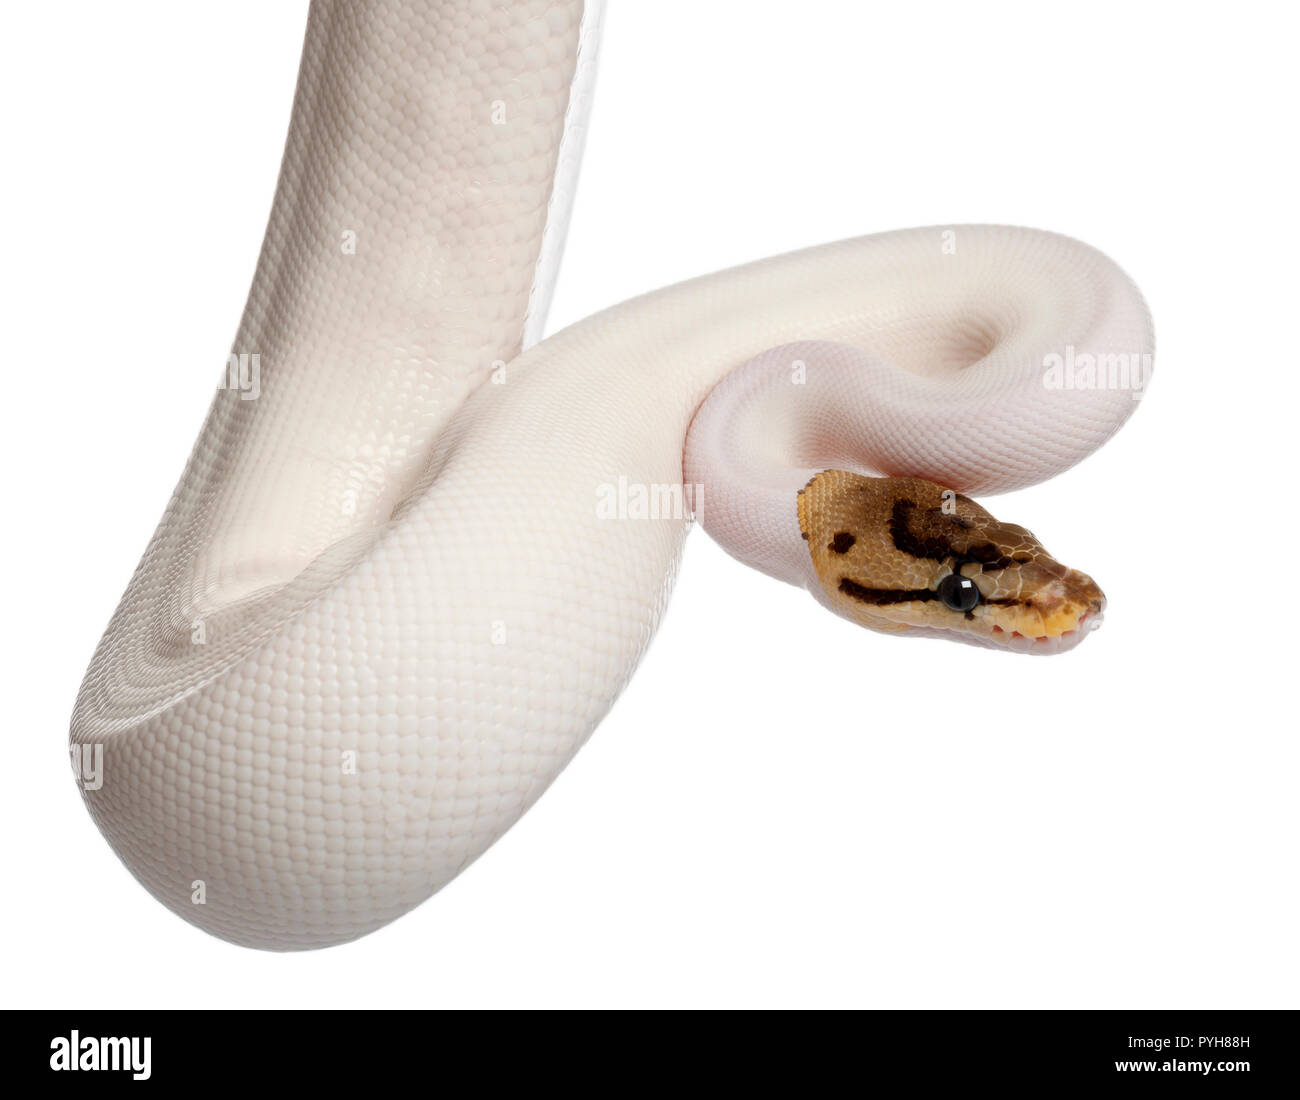 Pied femmina Spider Royal python, palla Python Python regius, 18 mesi di età, di fronte a uno sfondo bianco Foto Stock